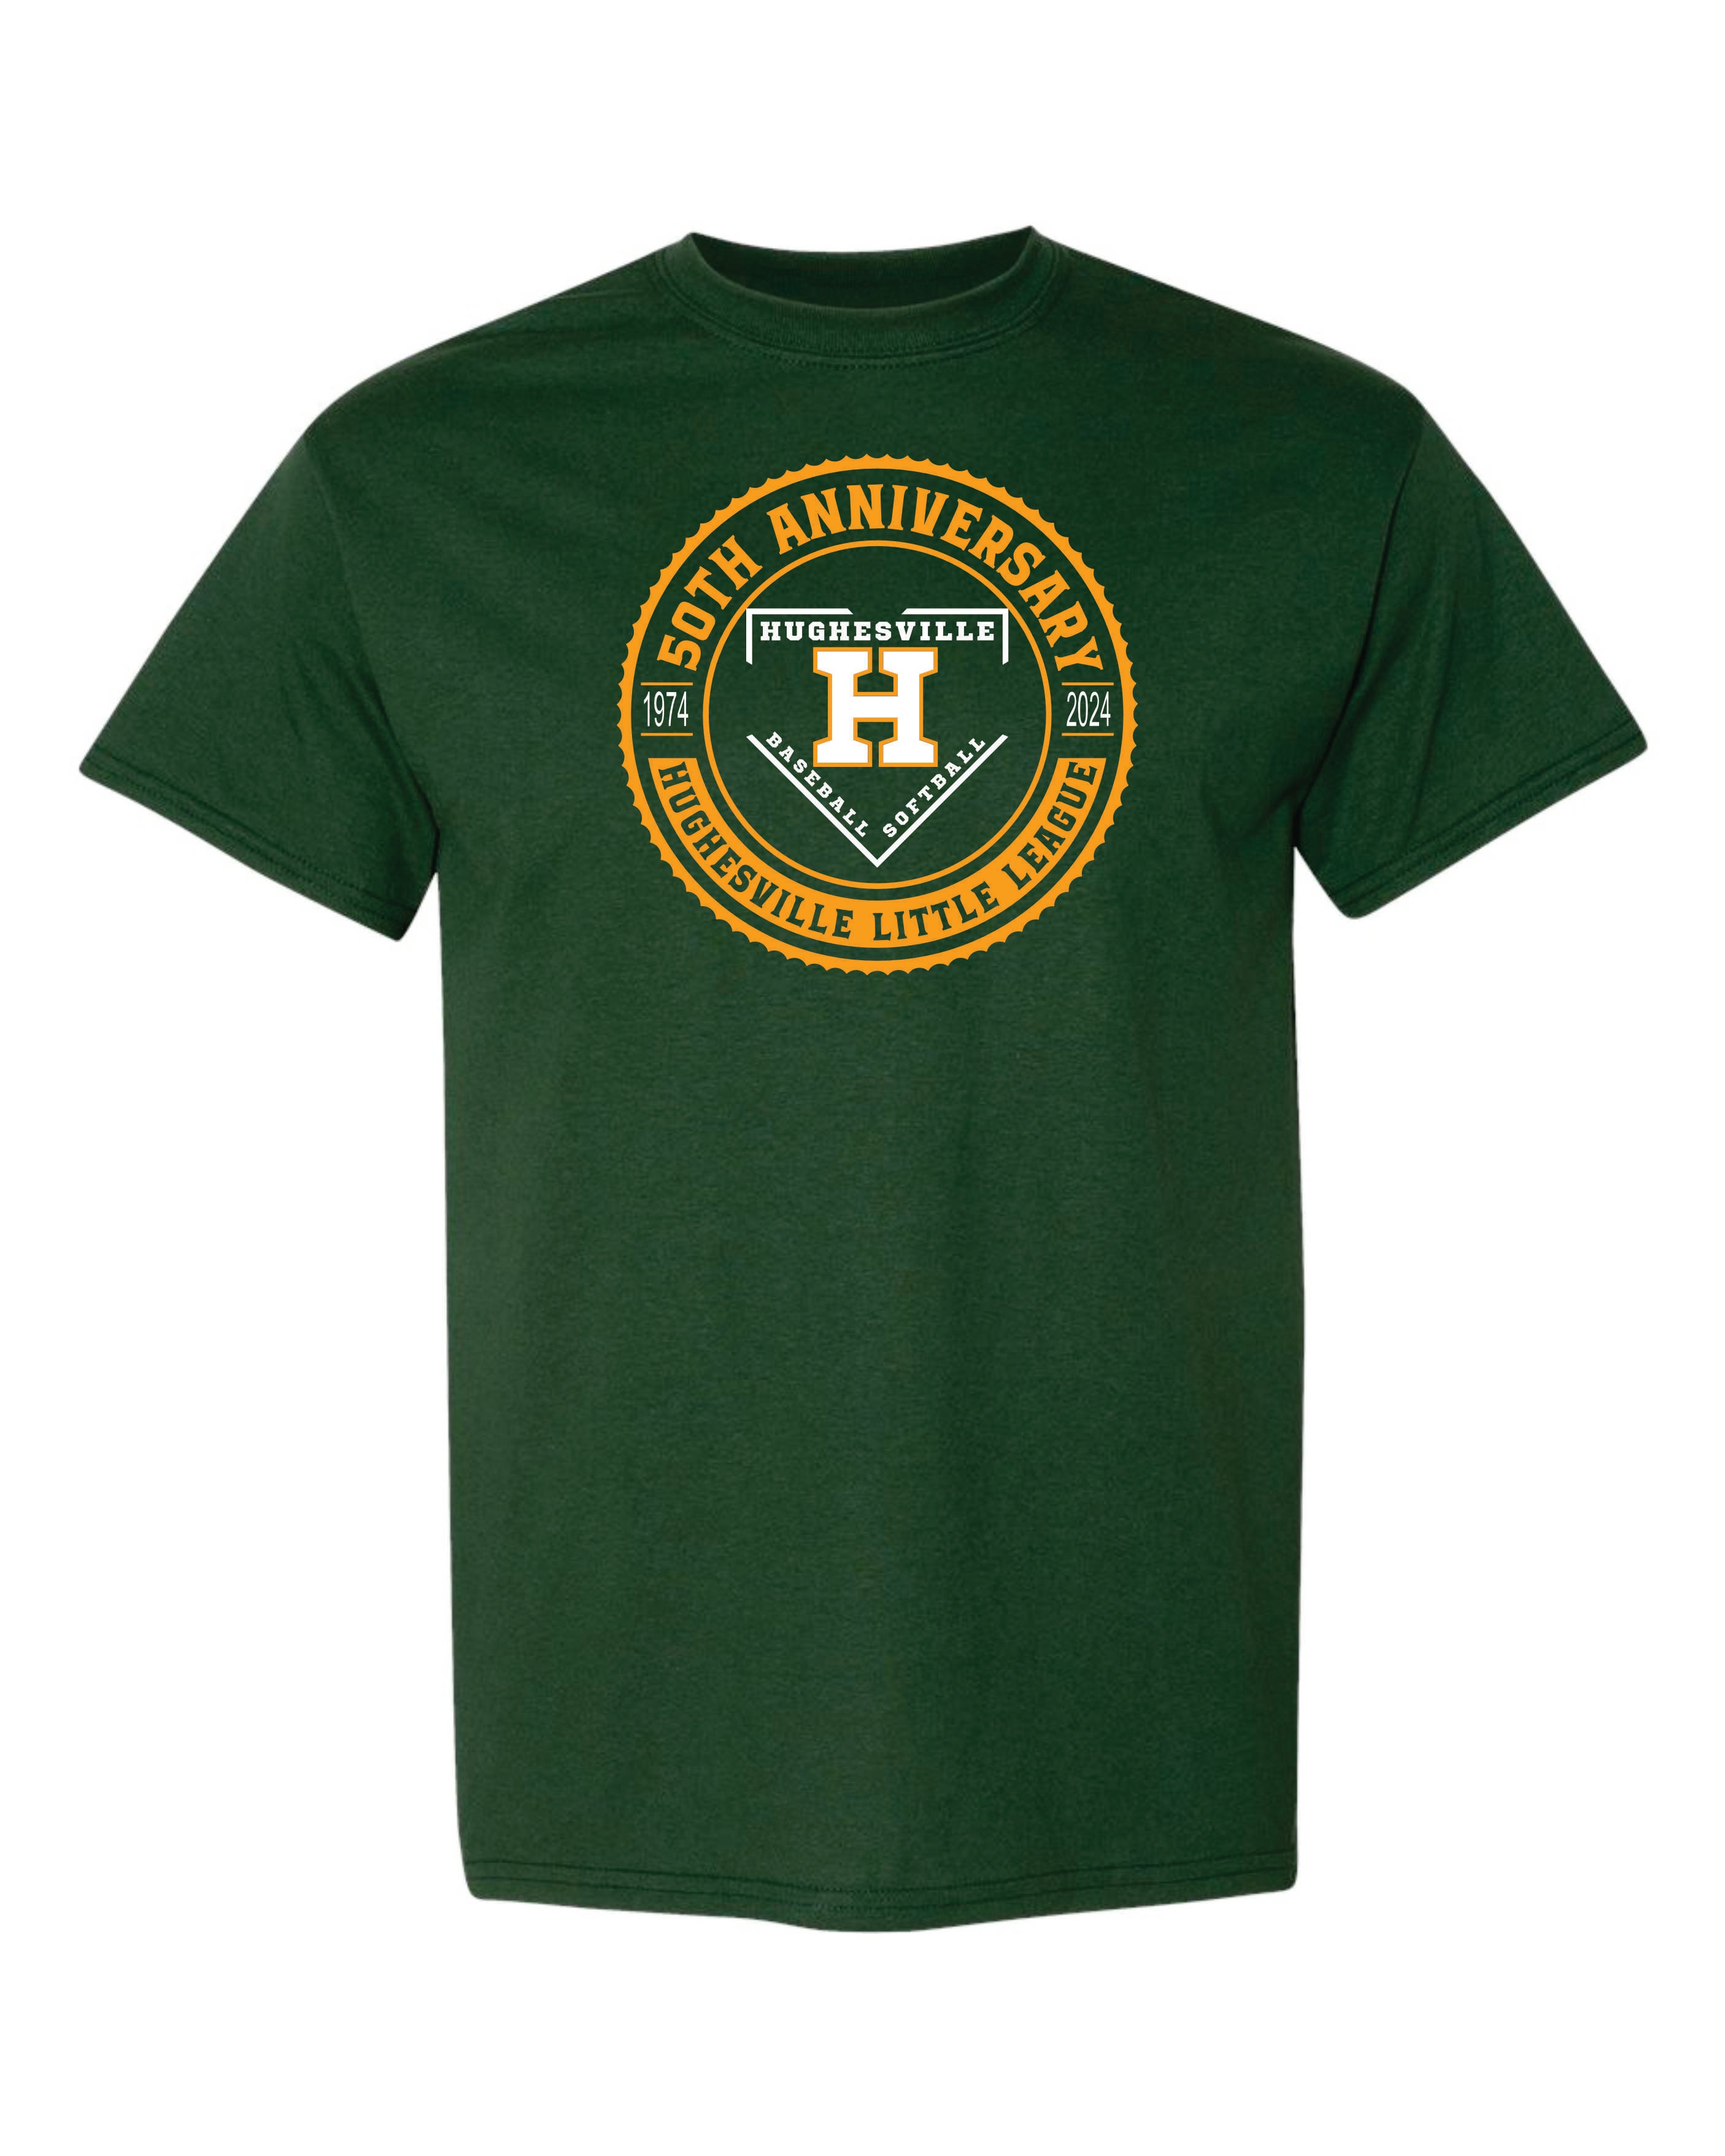 Hughesville LL Short Sleeve 50/50 Blend T shirt LIMITED EDITION 50TH ANNIVERSARY